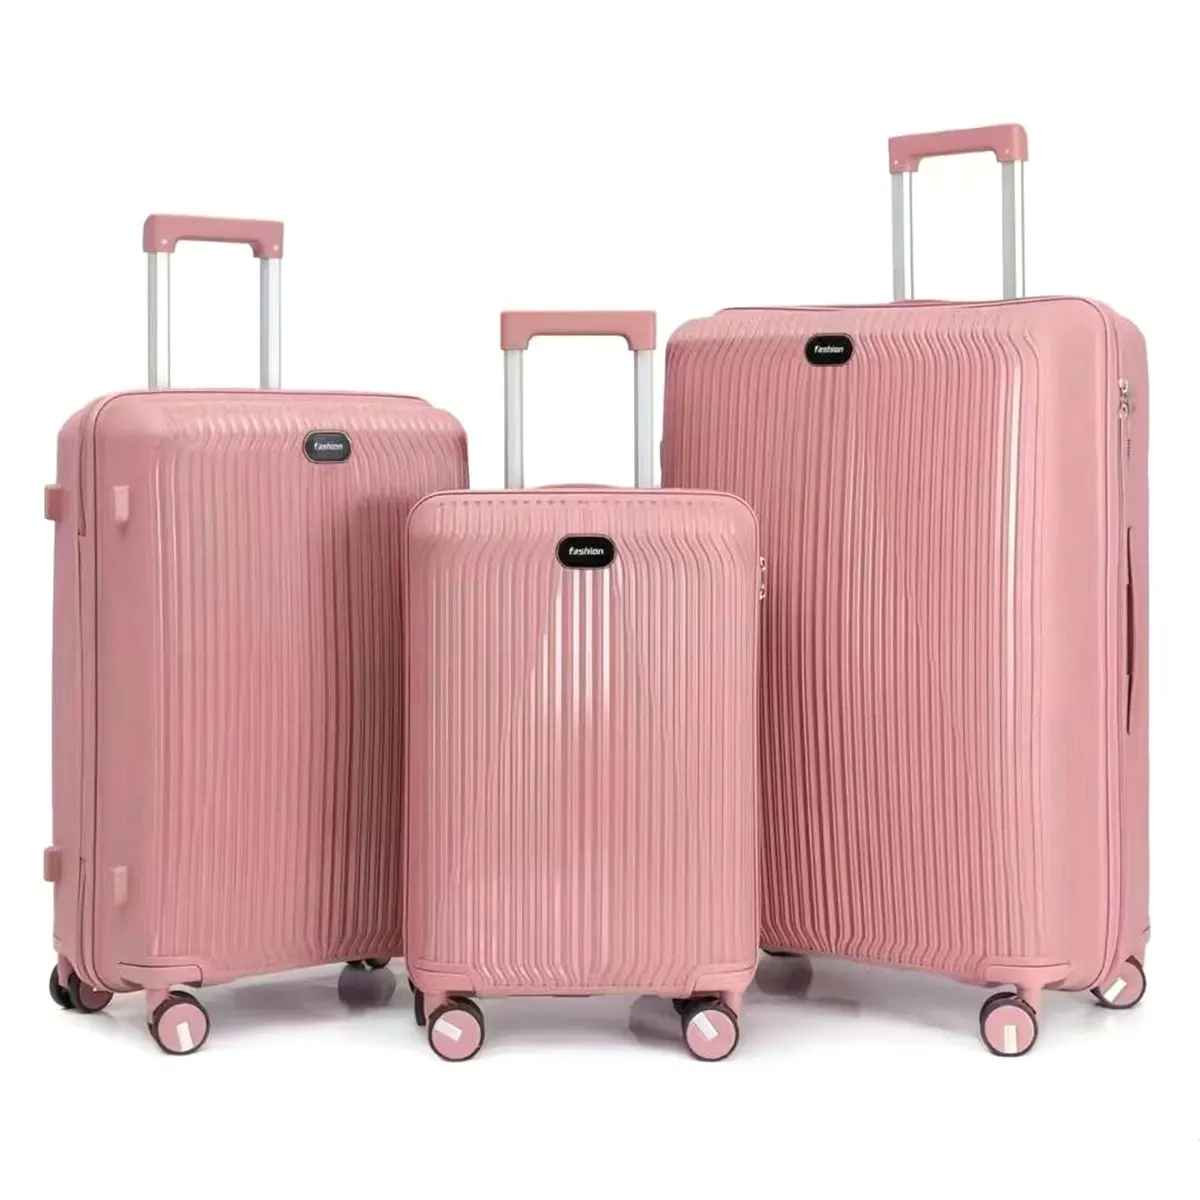 PP מזוודות נשיאה מארז חליפת נסיעות ערכות מזוודות מזוודה PP ערכת מזוודות